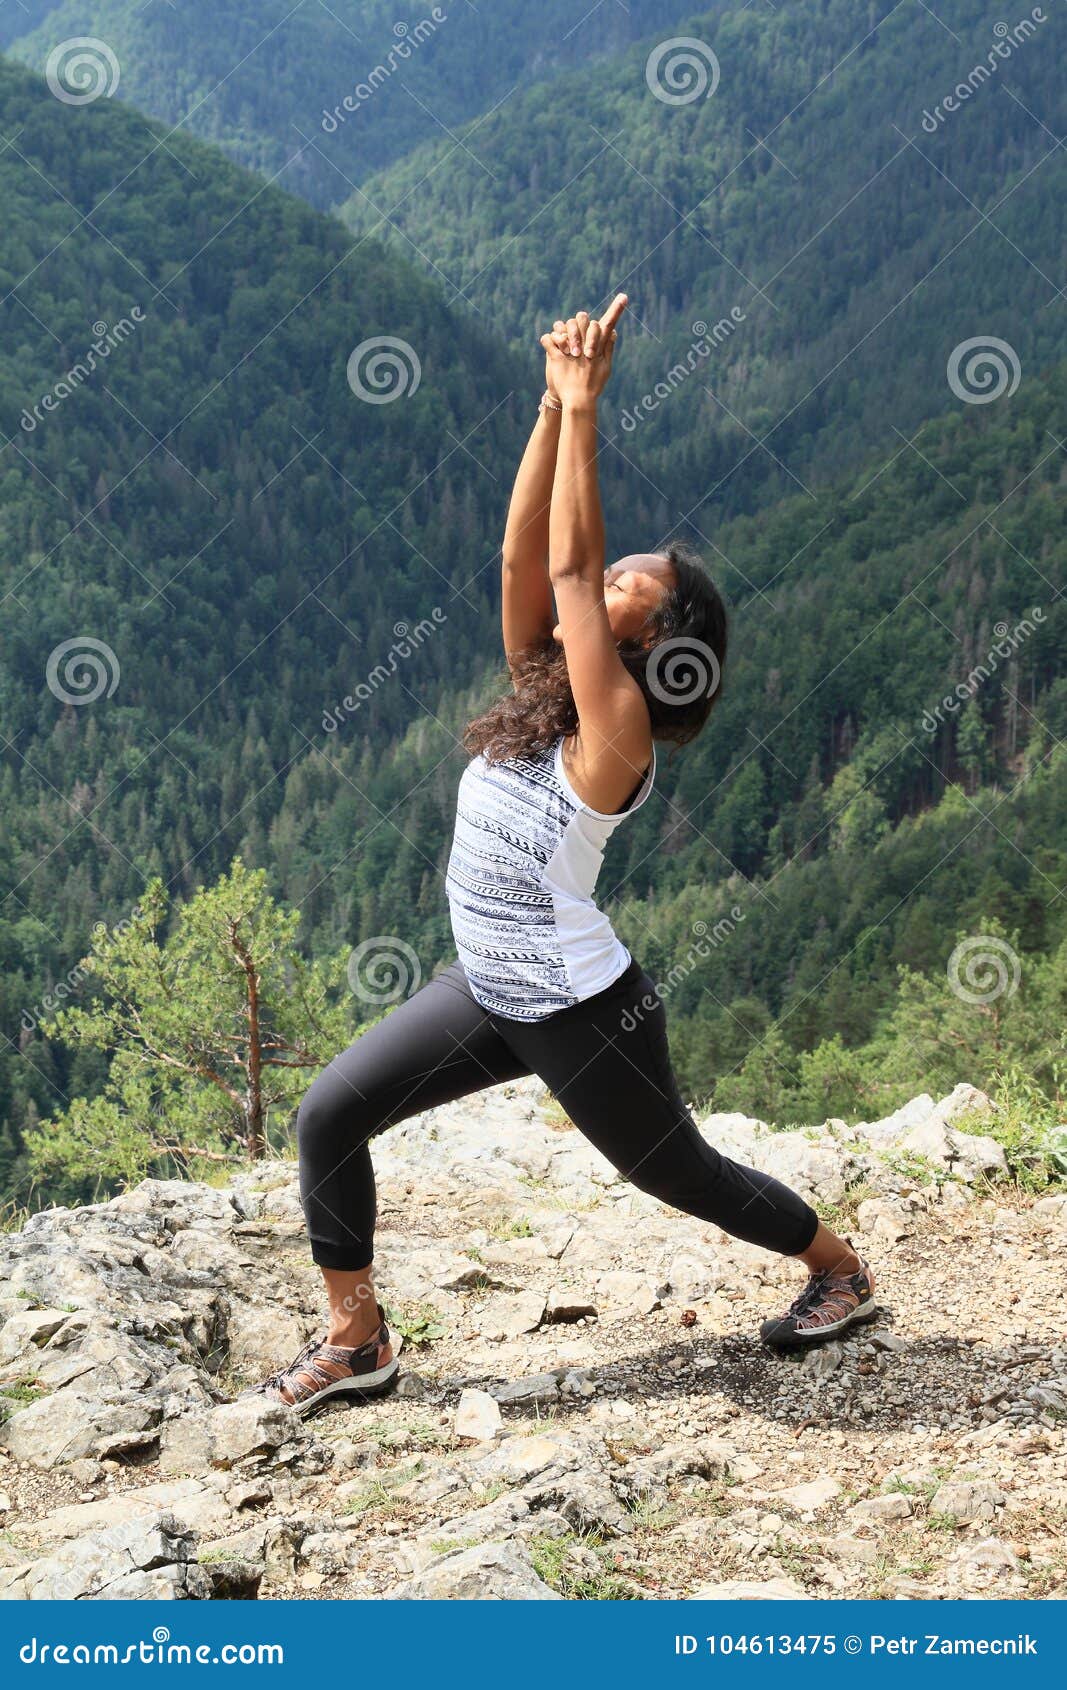 papuan young woman tropical girl exercising yoga pose anjaneyasana front hills forest viewpoint slovak paradise 104613475